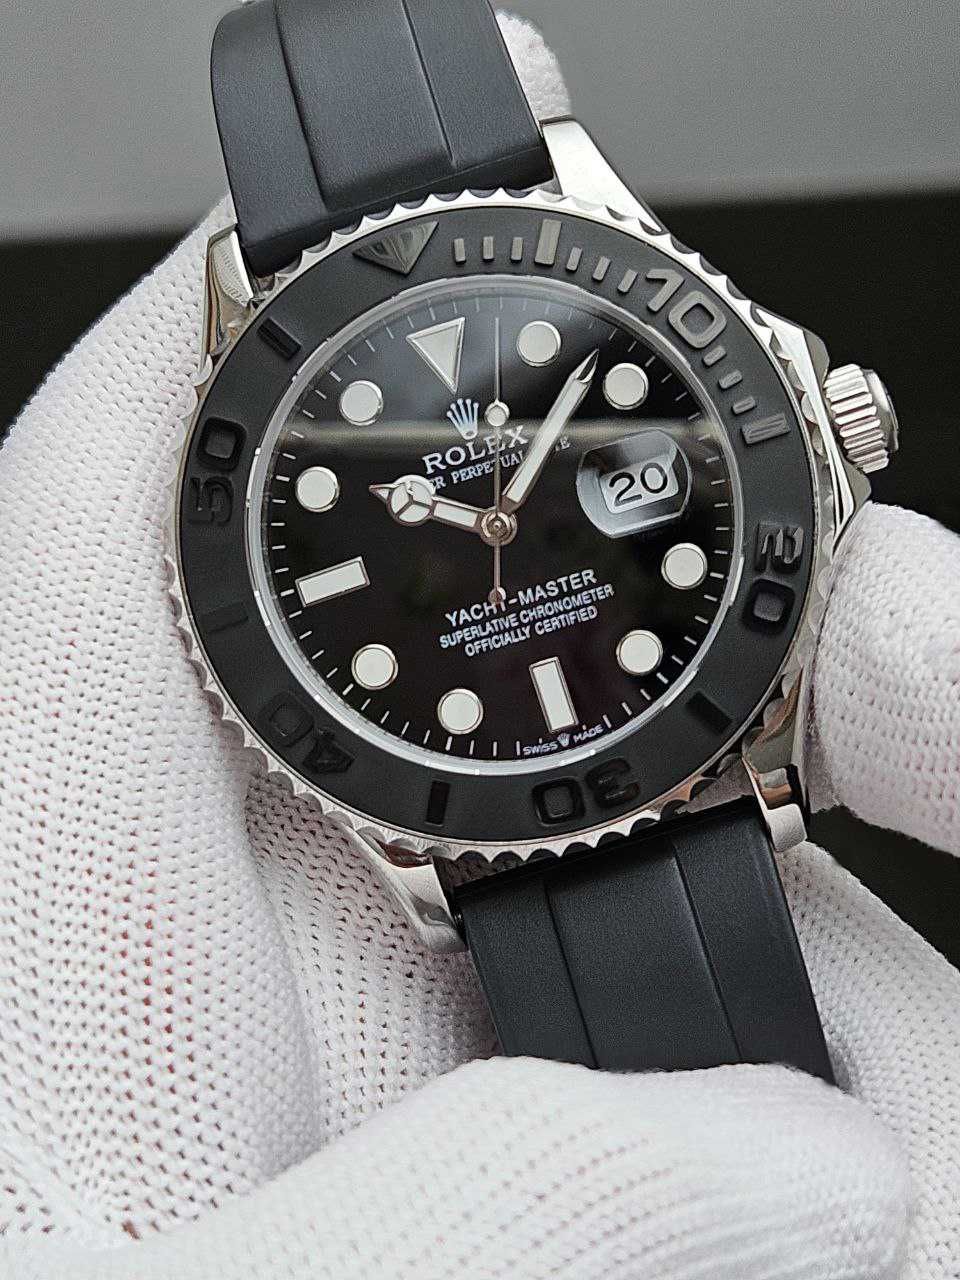 Швейцарские часы Rolex Yacht-Master Black. Топ качество